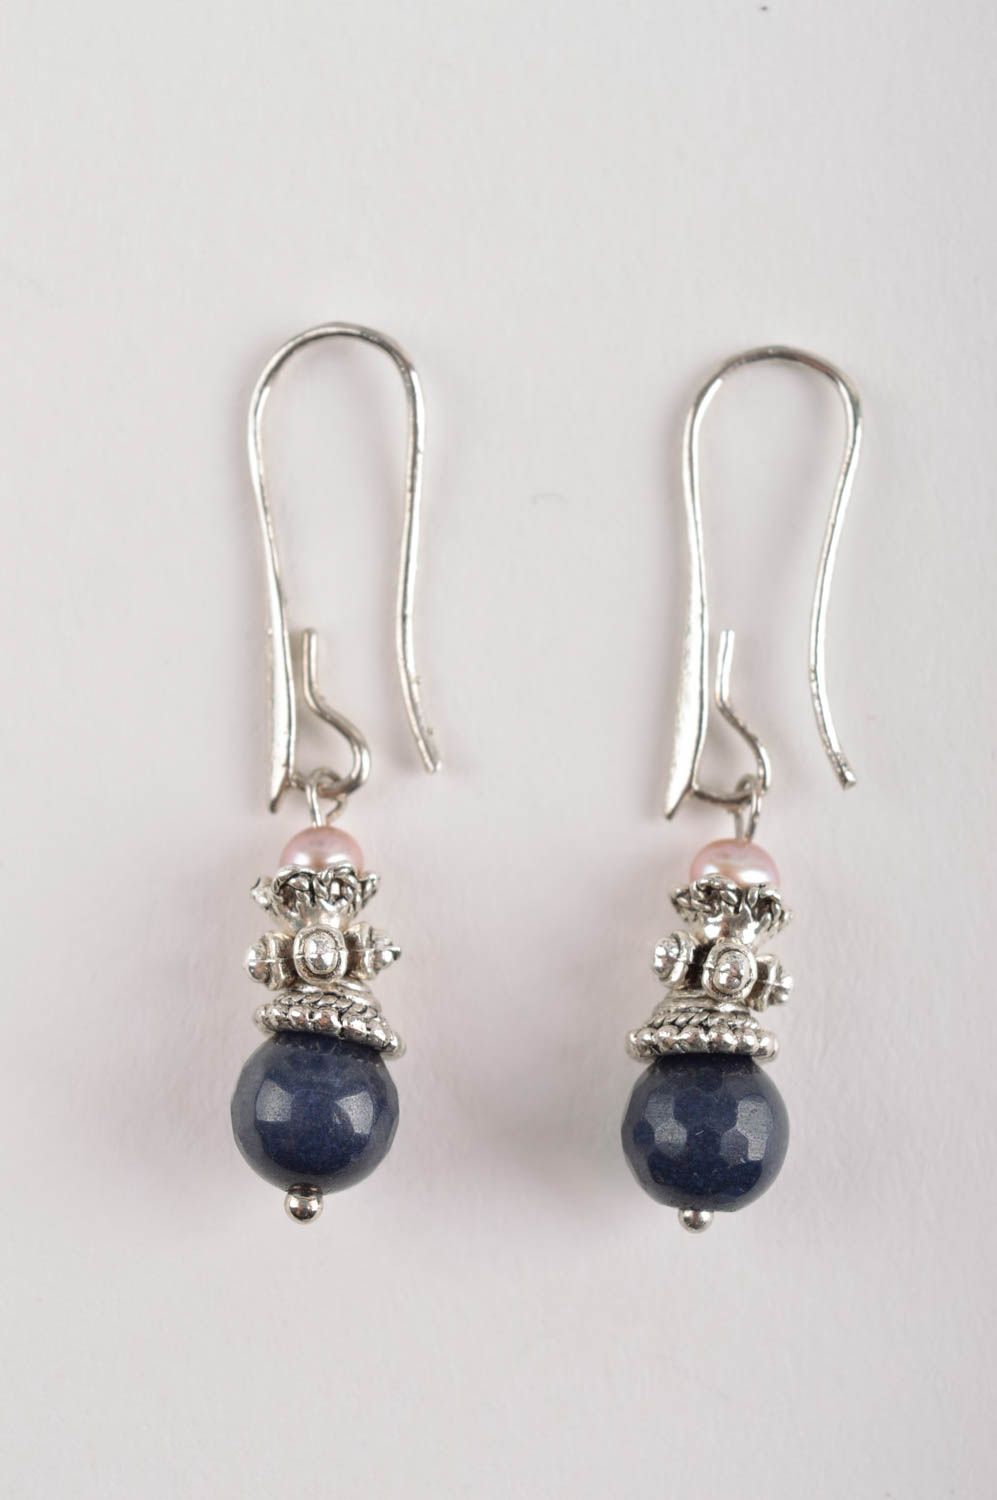 Handmade jewelry stone earrings dangling earrings women accessories gift for her photo 2